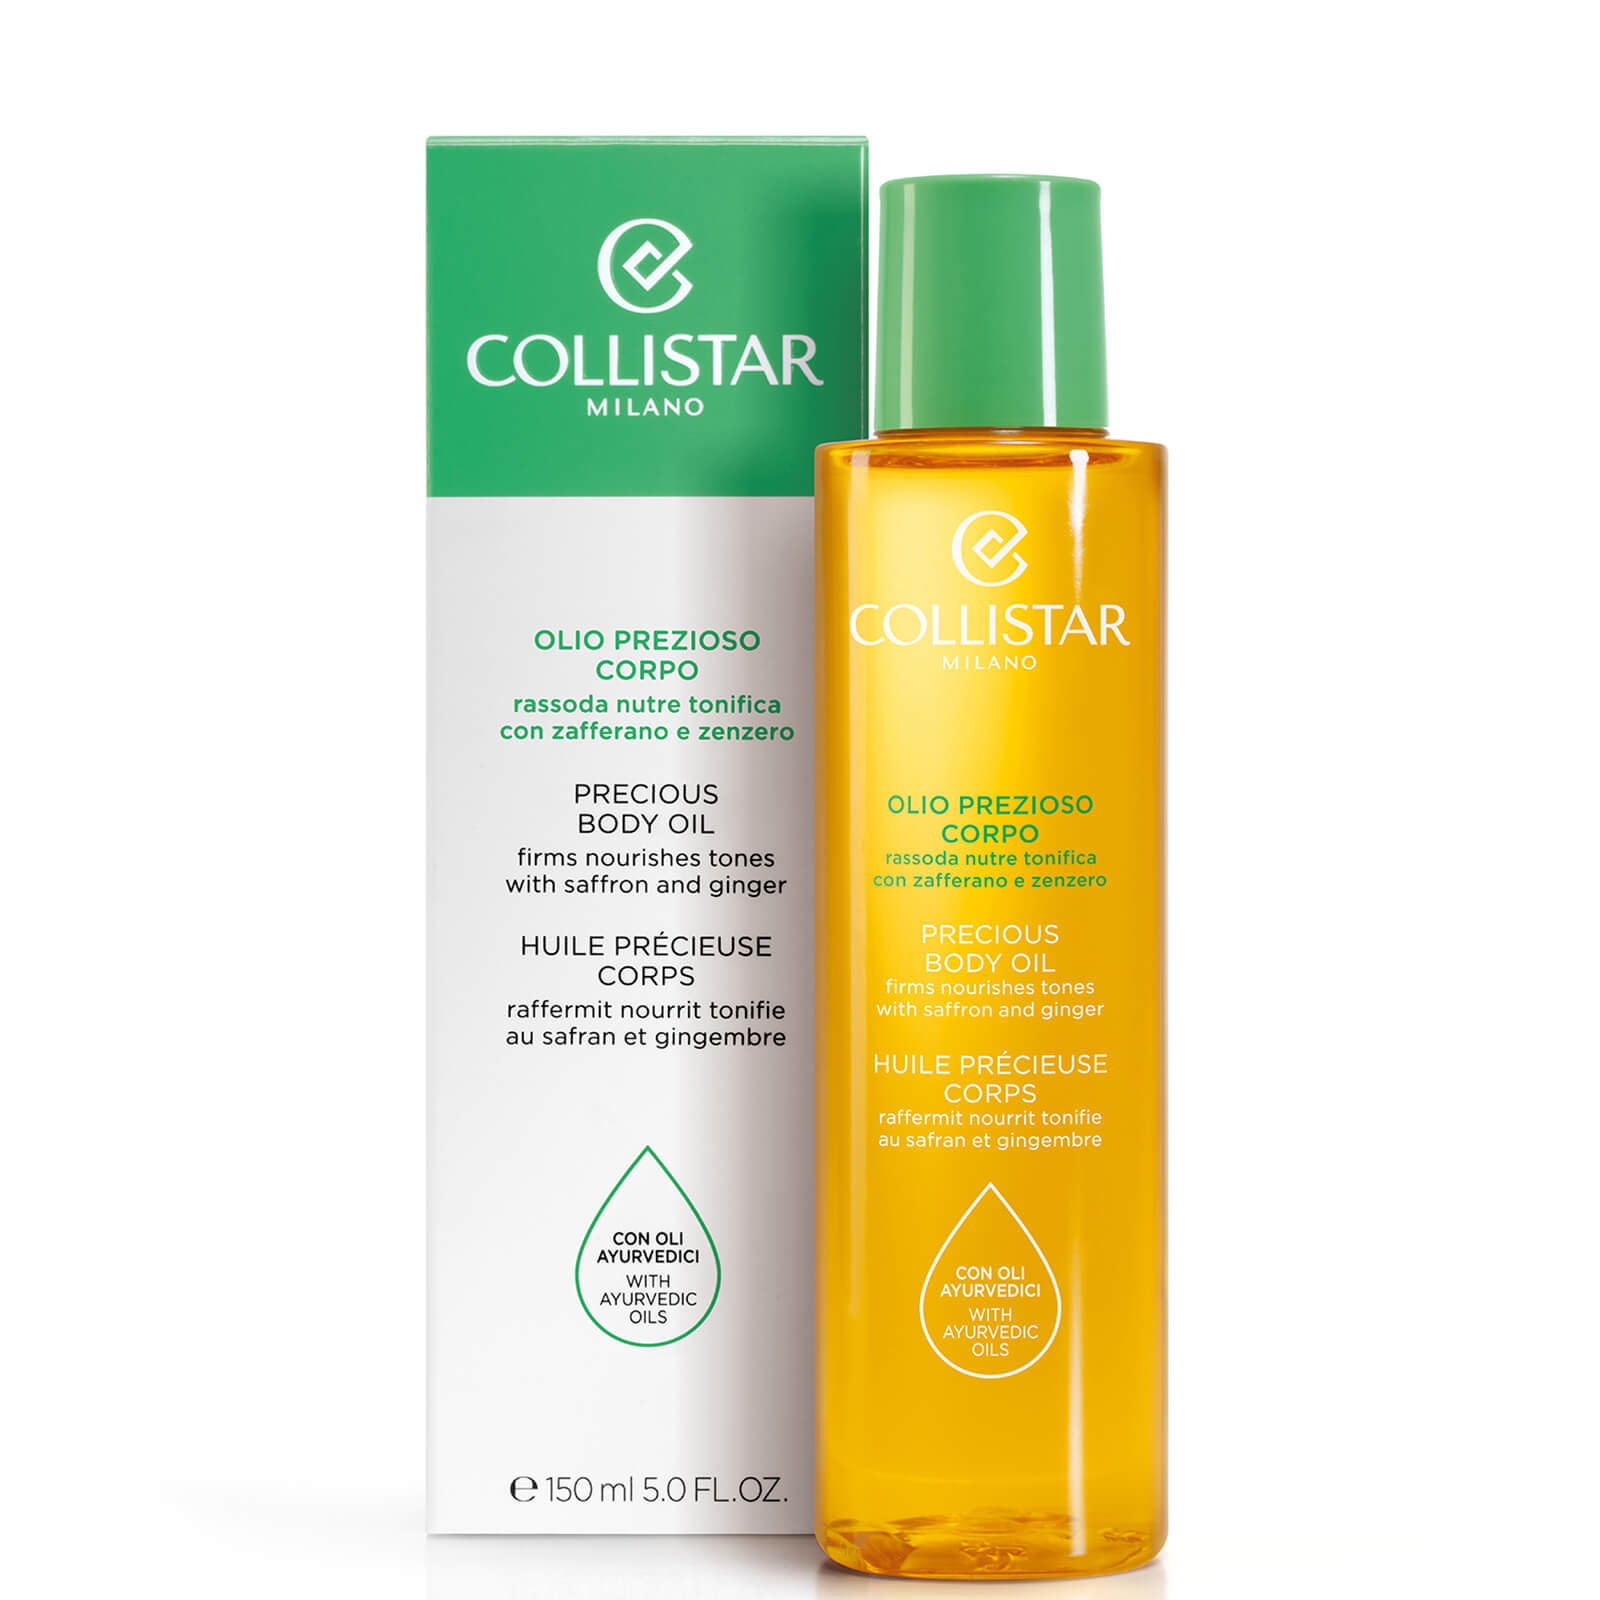 Collistar Precious Body Oil Firms Nourishes Tones With Saffron and Ginger 150ml von Collistar